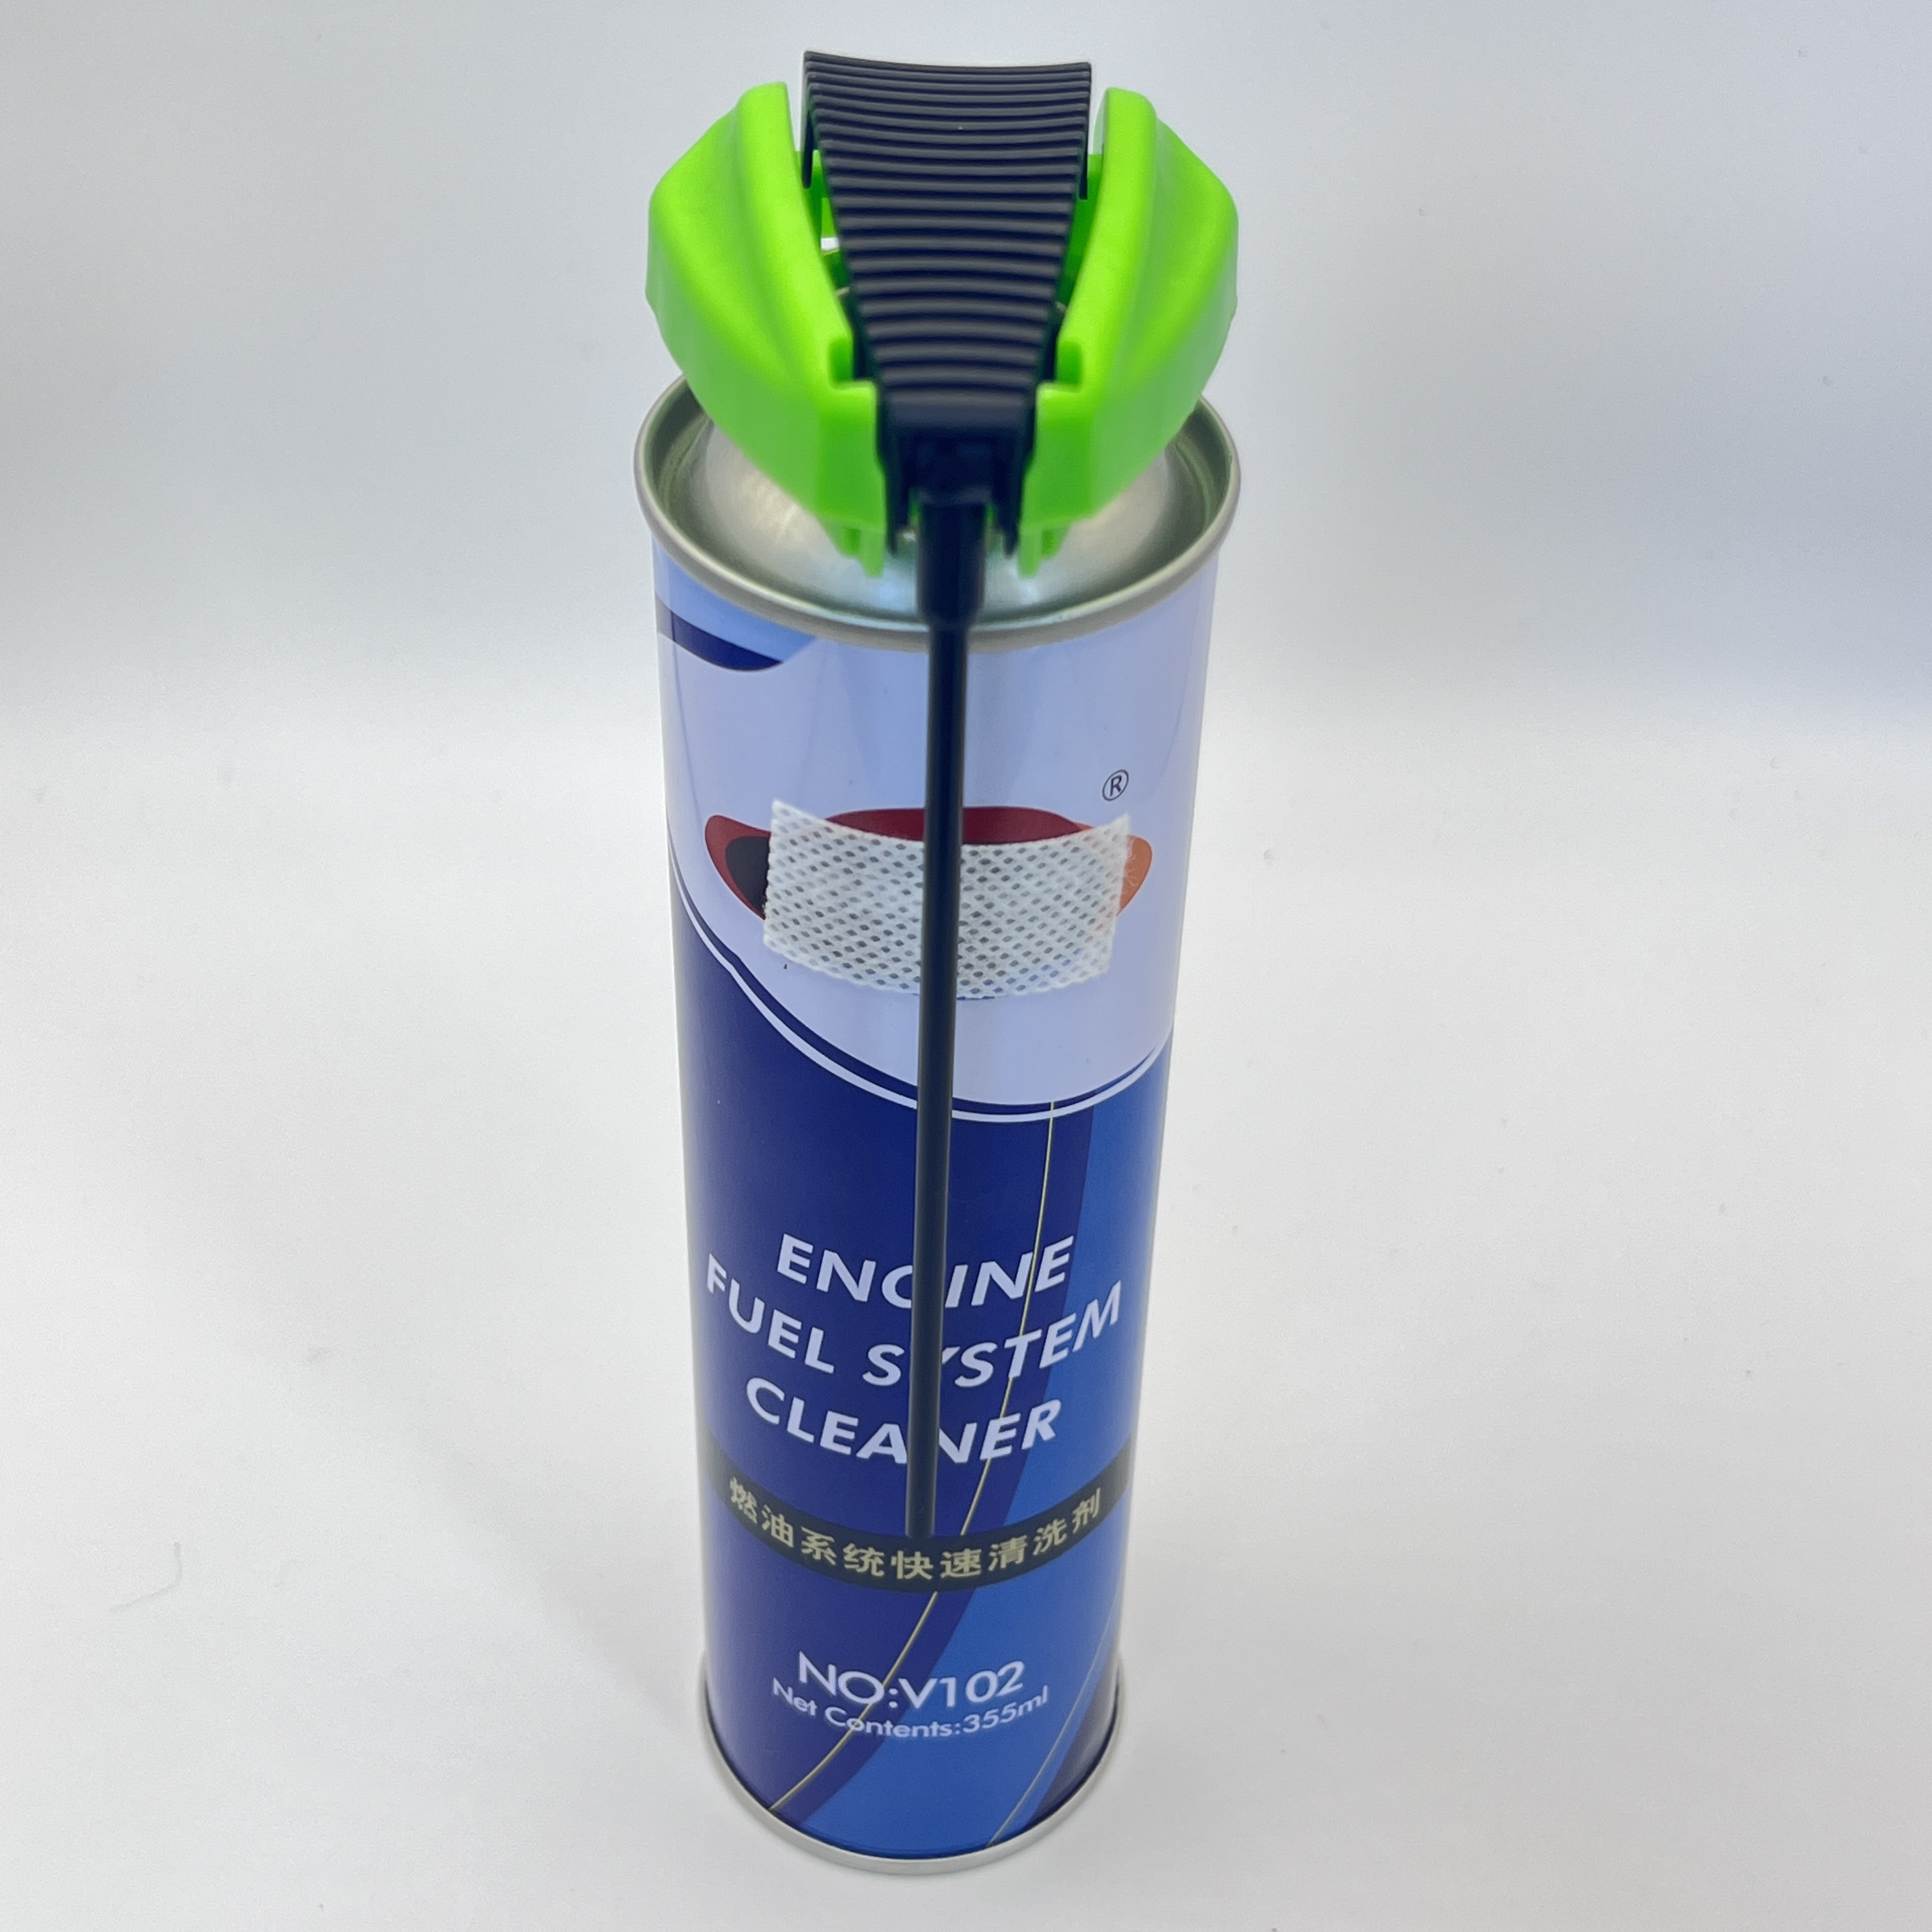 Fine Mist Aerosol Spray Nozzle for Personal Care and Beauty - Delicate and Precise